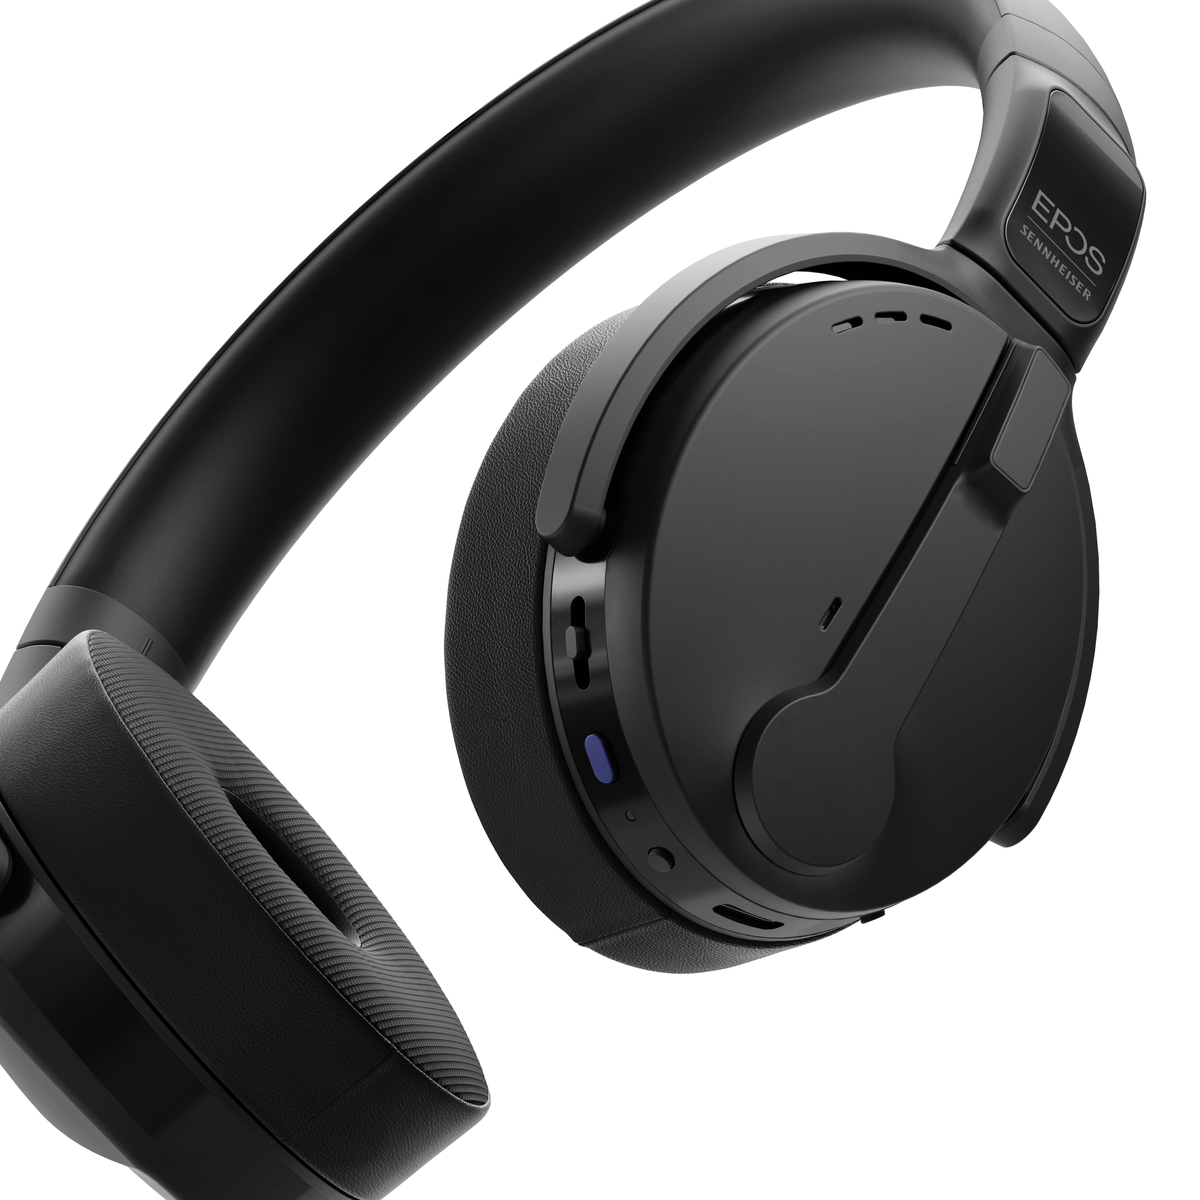 EPOS Bluetooth Schwarz Bluetooth On-ear Kopfhörer 1001170,